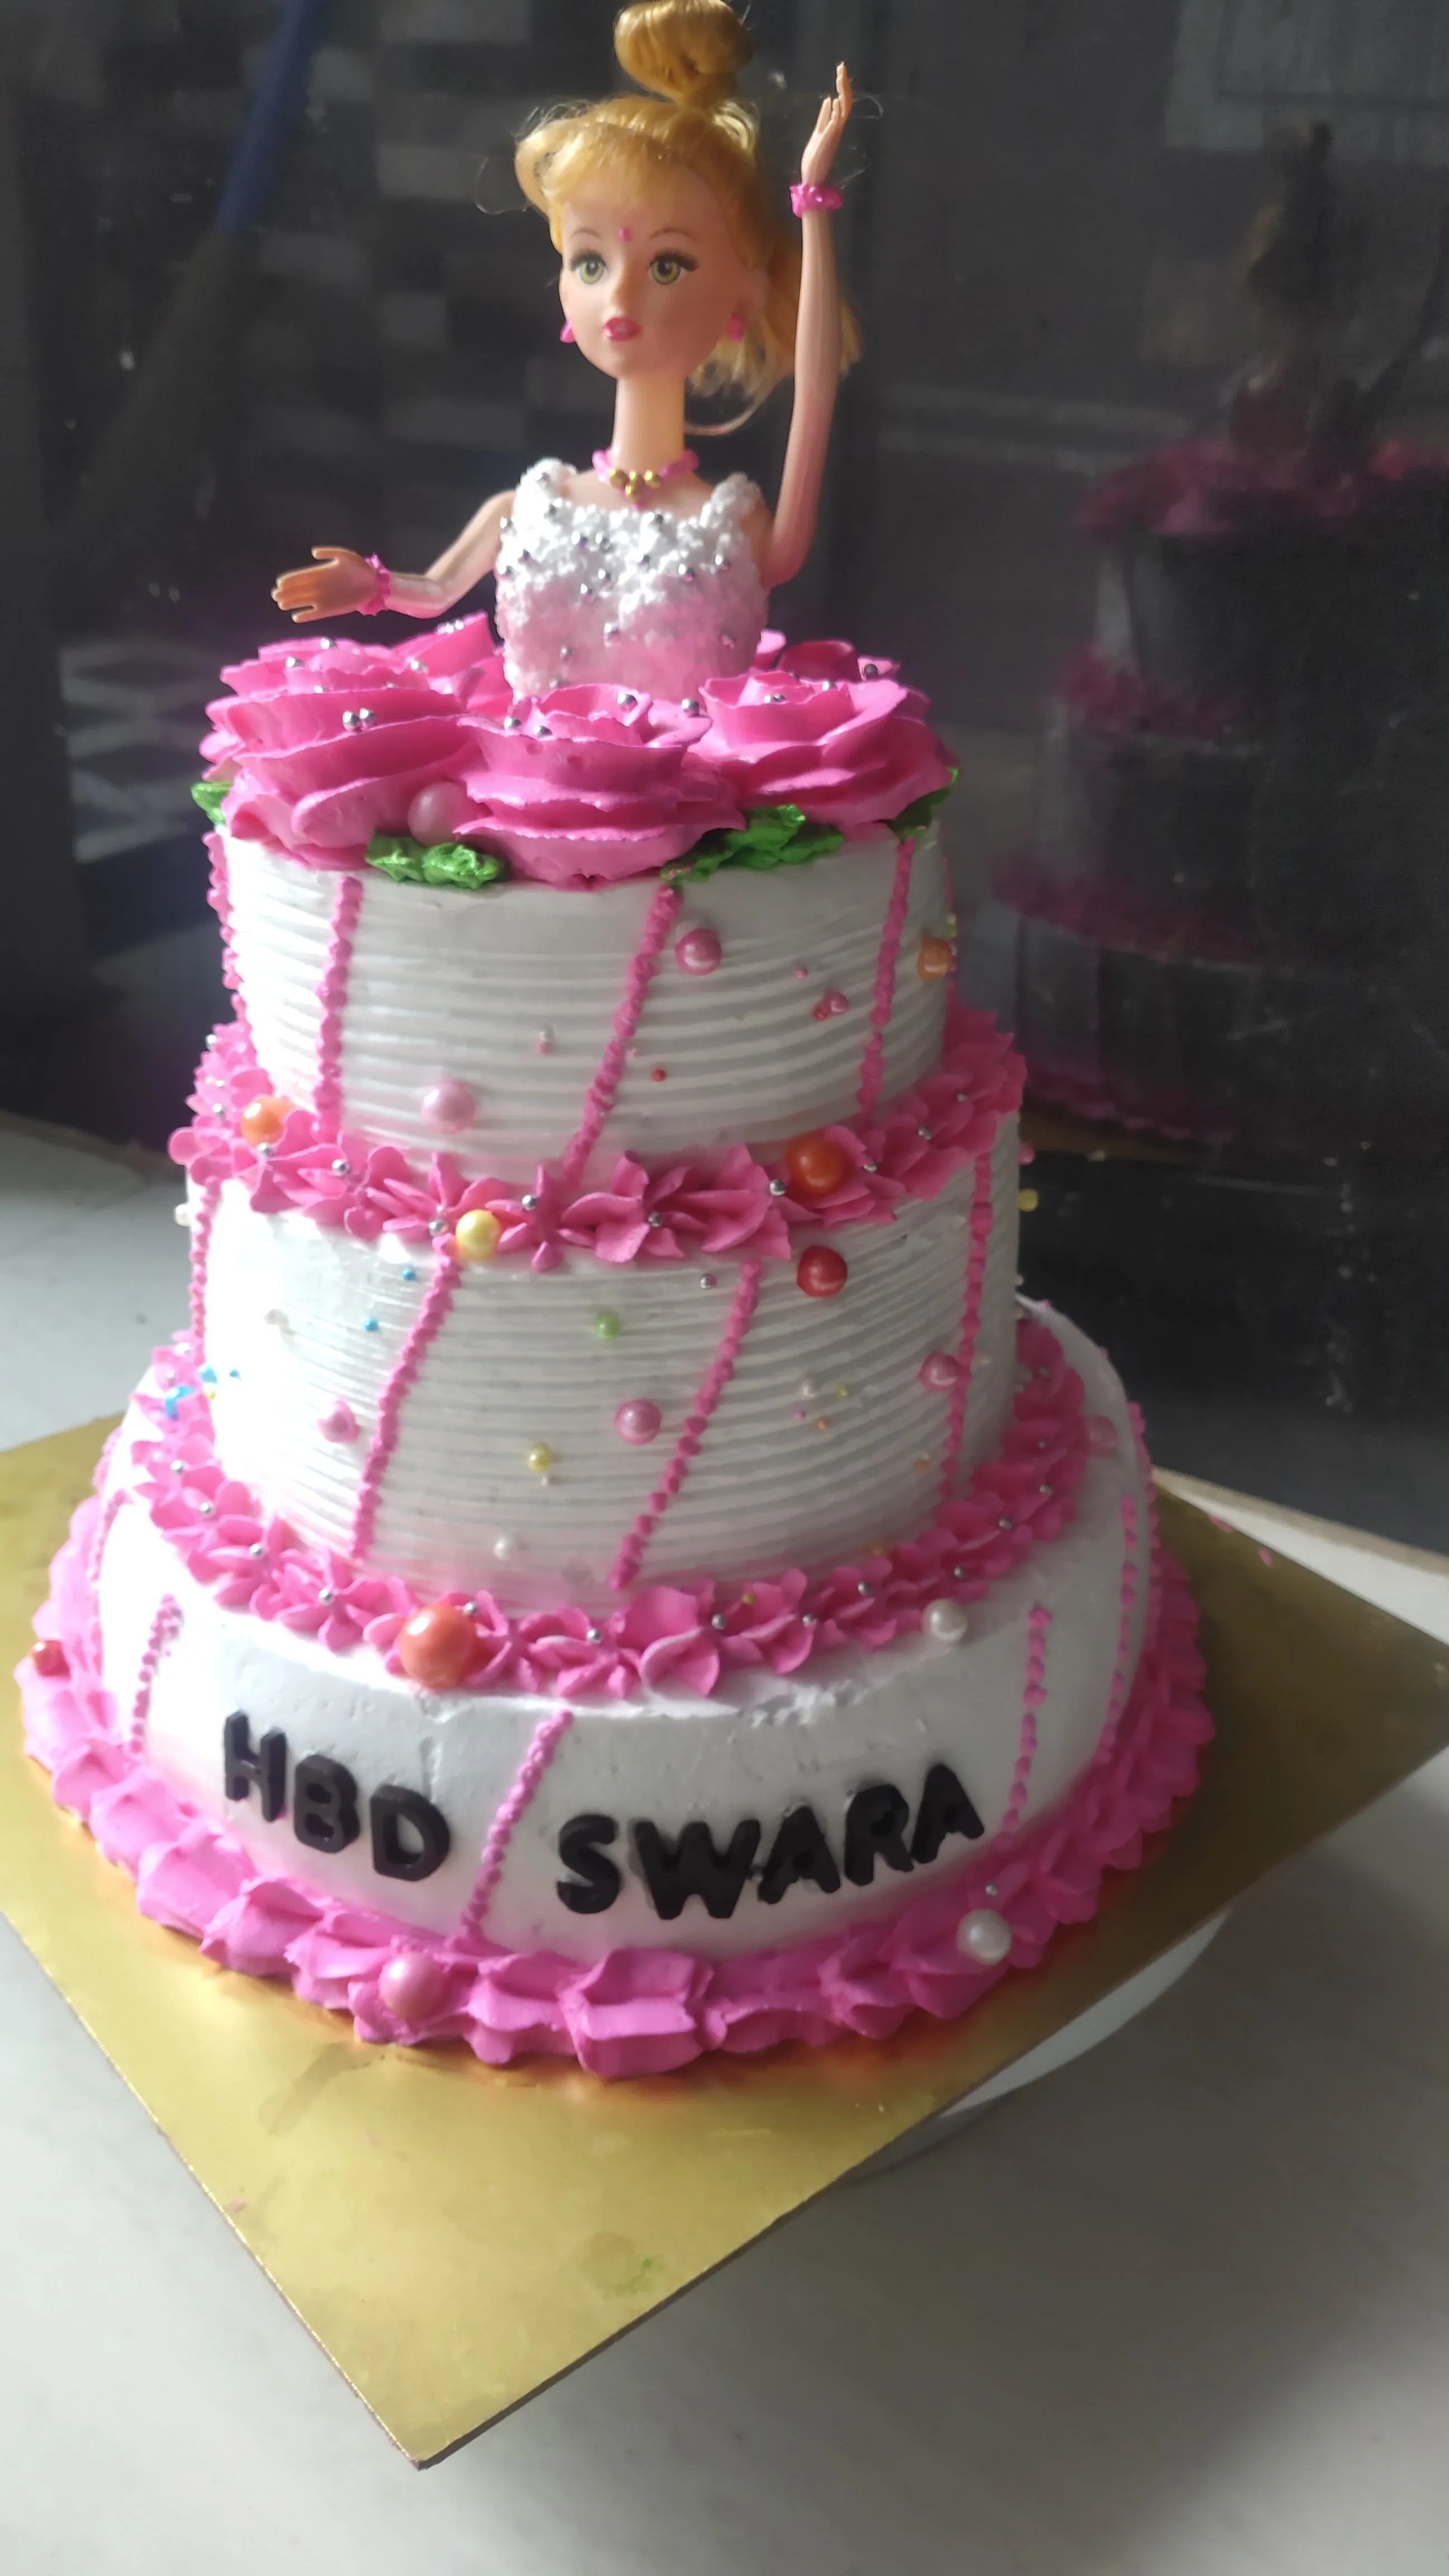 💖💖💖 Cake Barbie for cute Seedra💖💖💖 #cake #birthday #girl #barbie  #barbiecake #reel